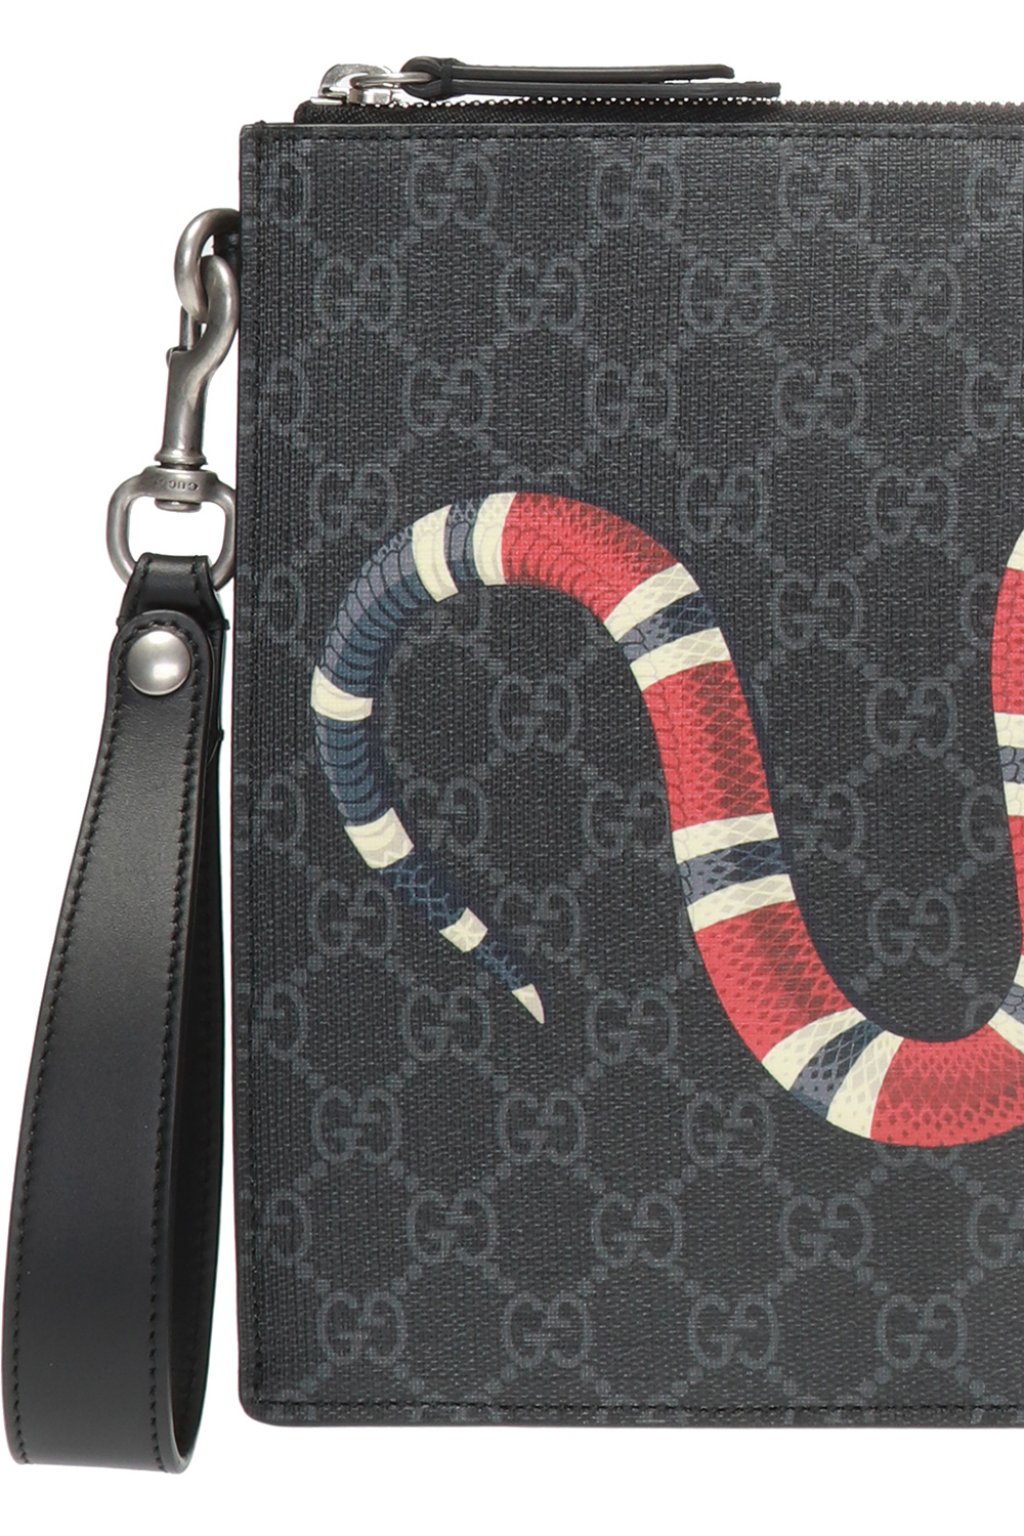 gucci snake clutch bag